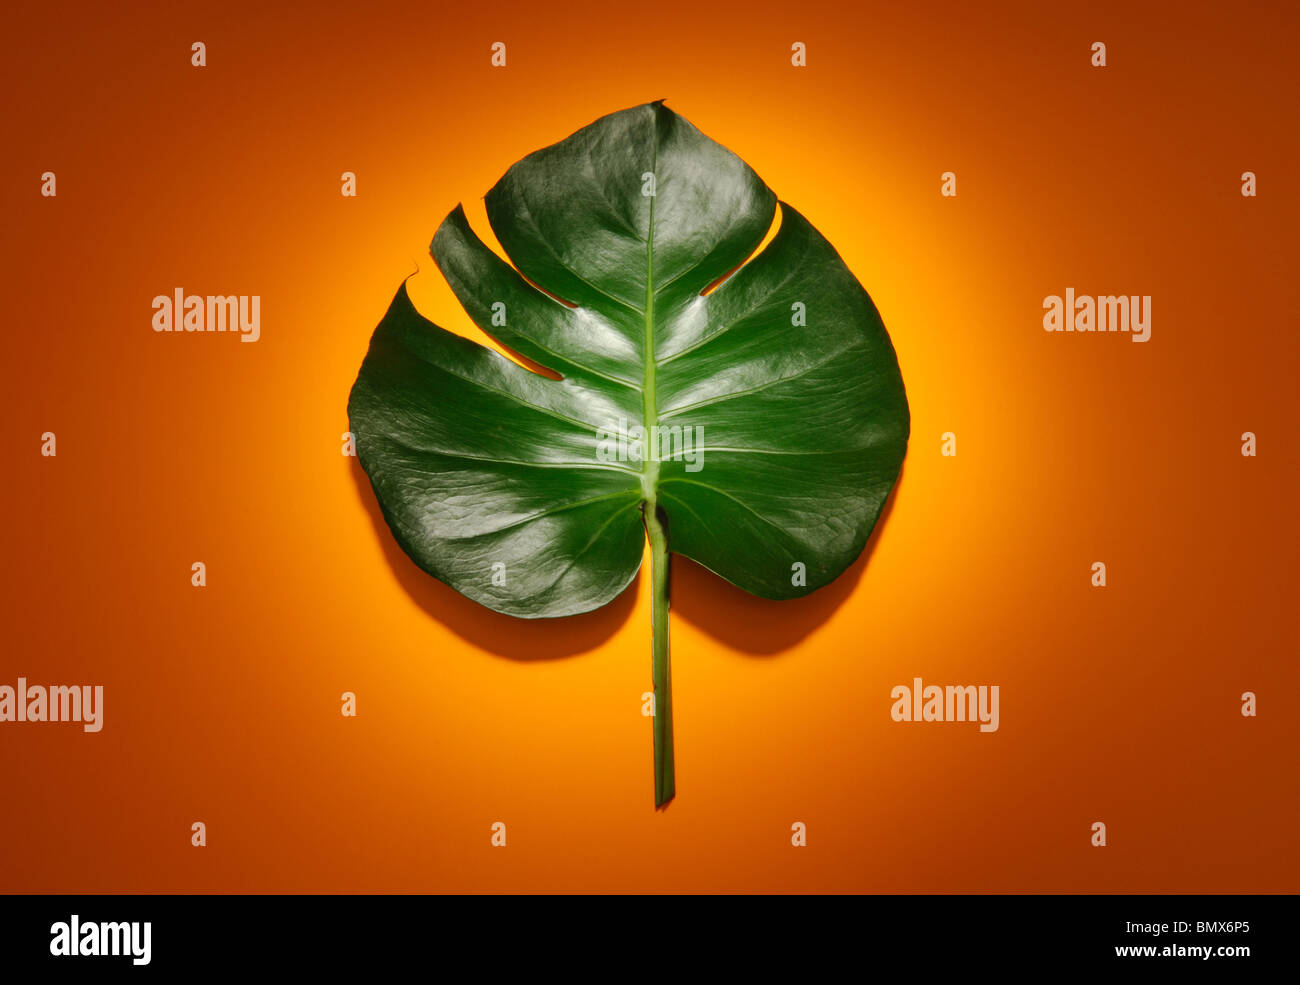 Tropical green plant leaf and stem, orange background Stock Photo